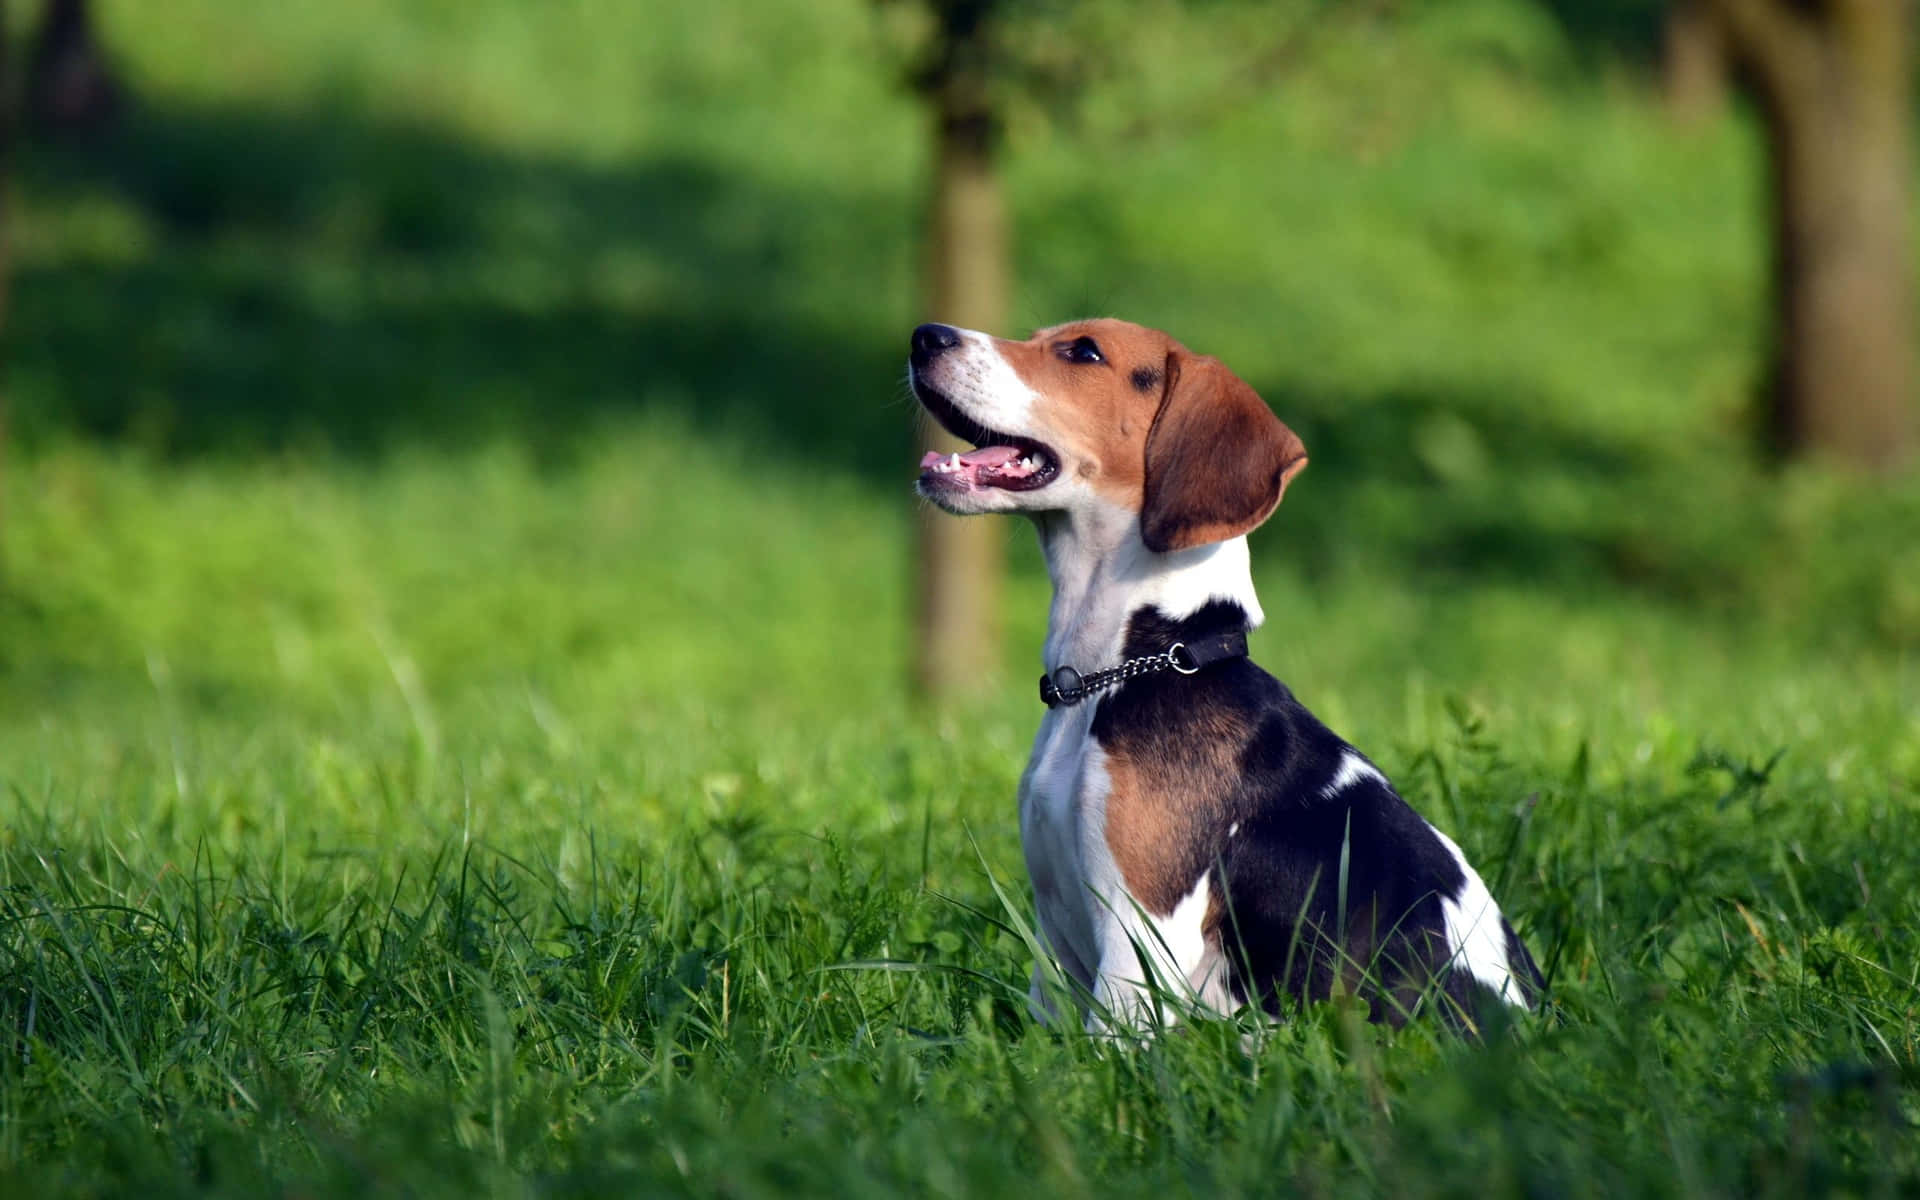 Dosadorables Perros Beagle Disfrutando Del Calor Del Sol